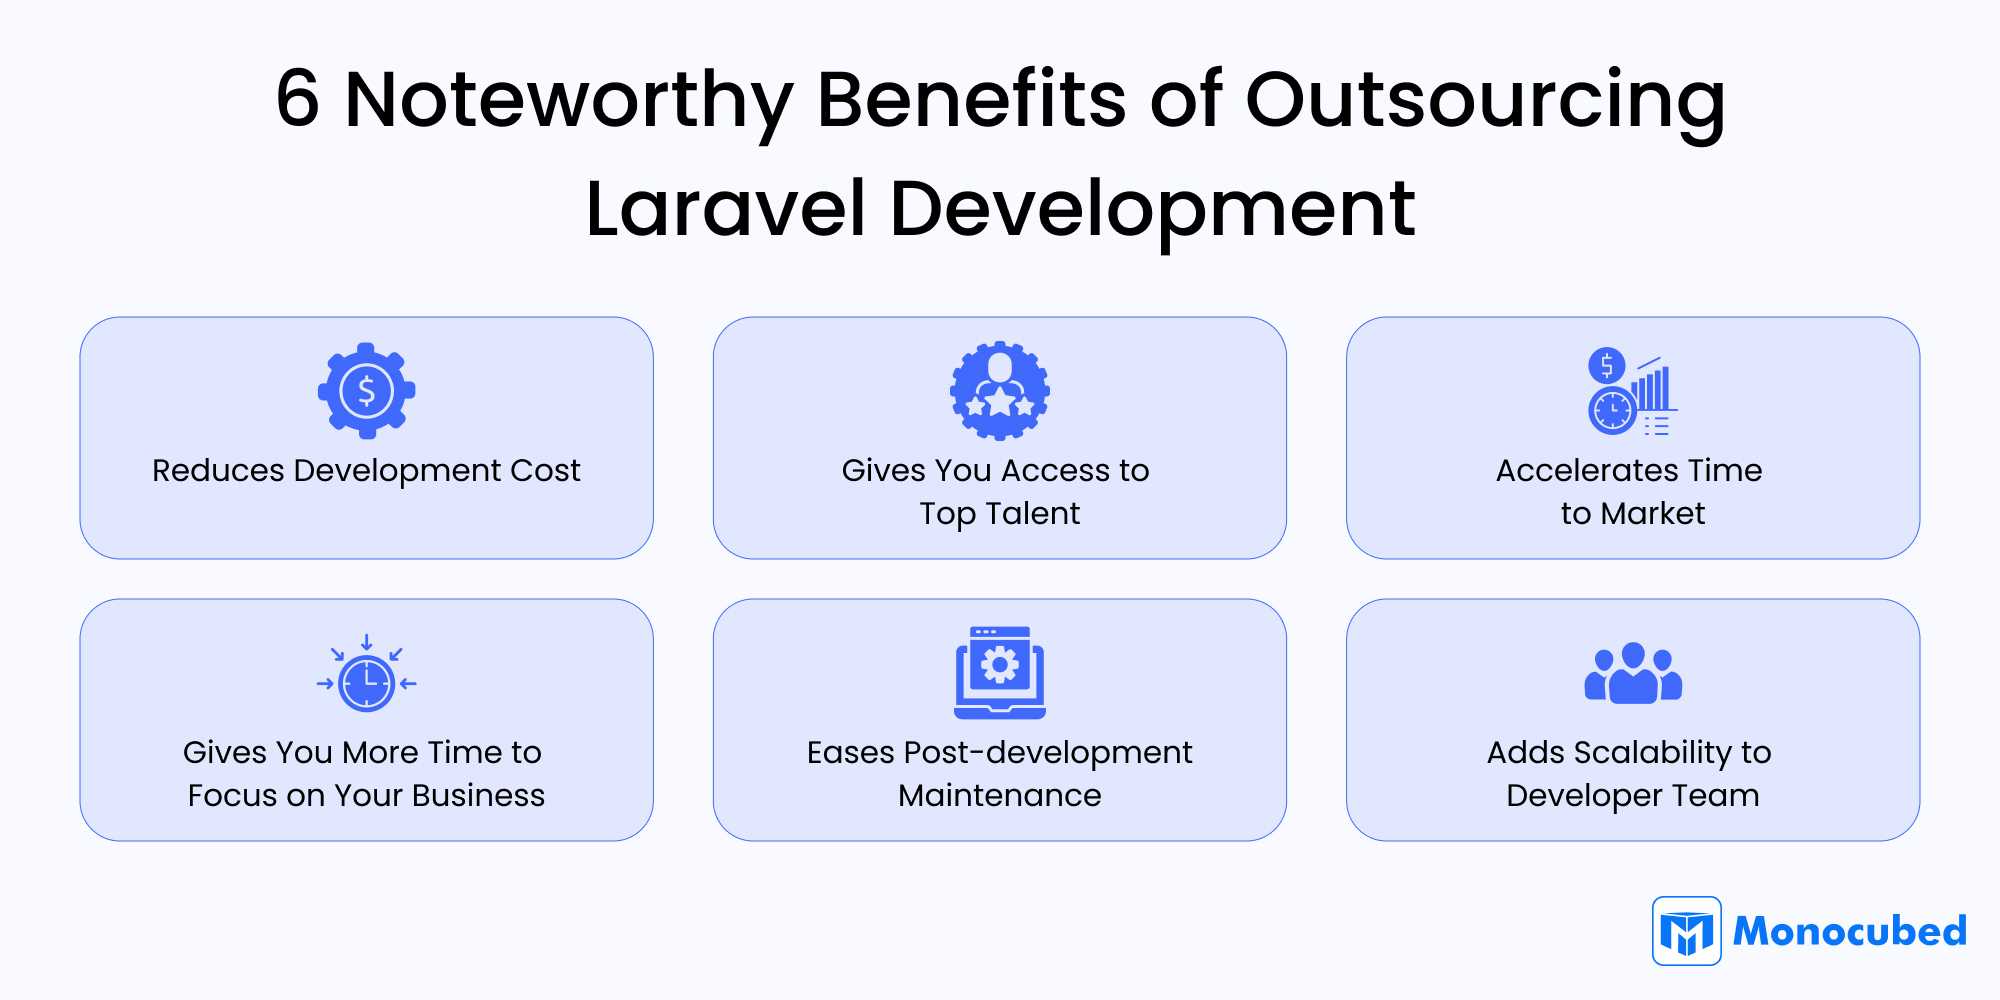 6 Noteworthy Benefits of Outsourcing Laravel Development